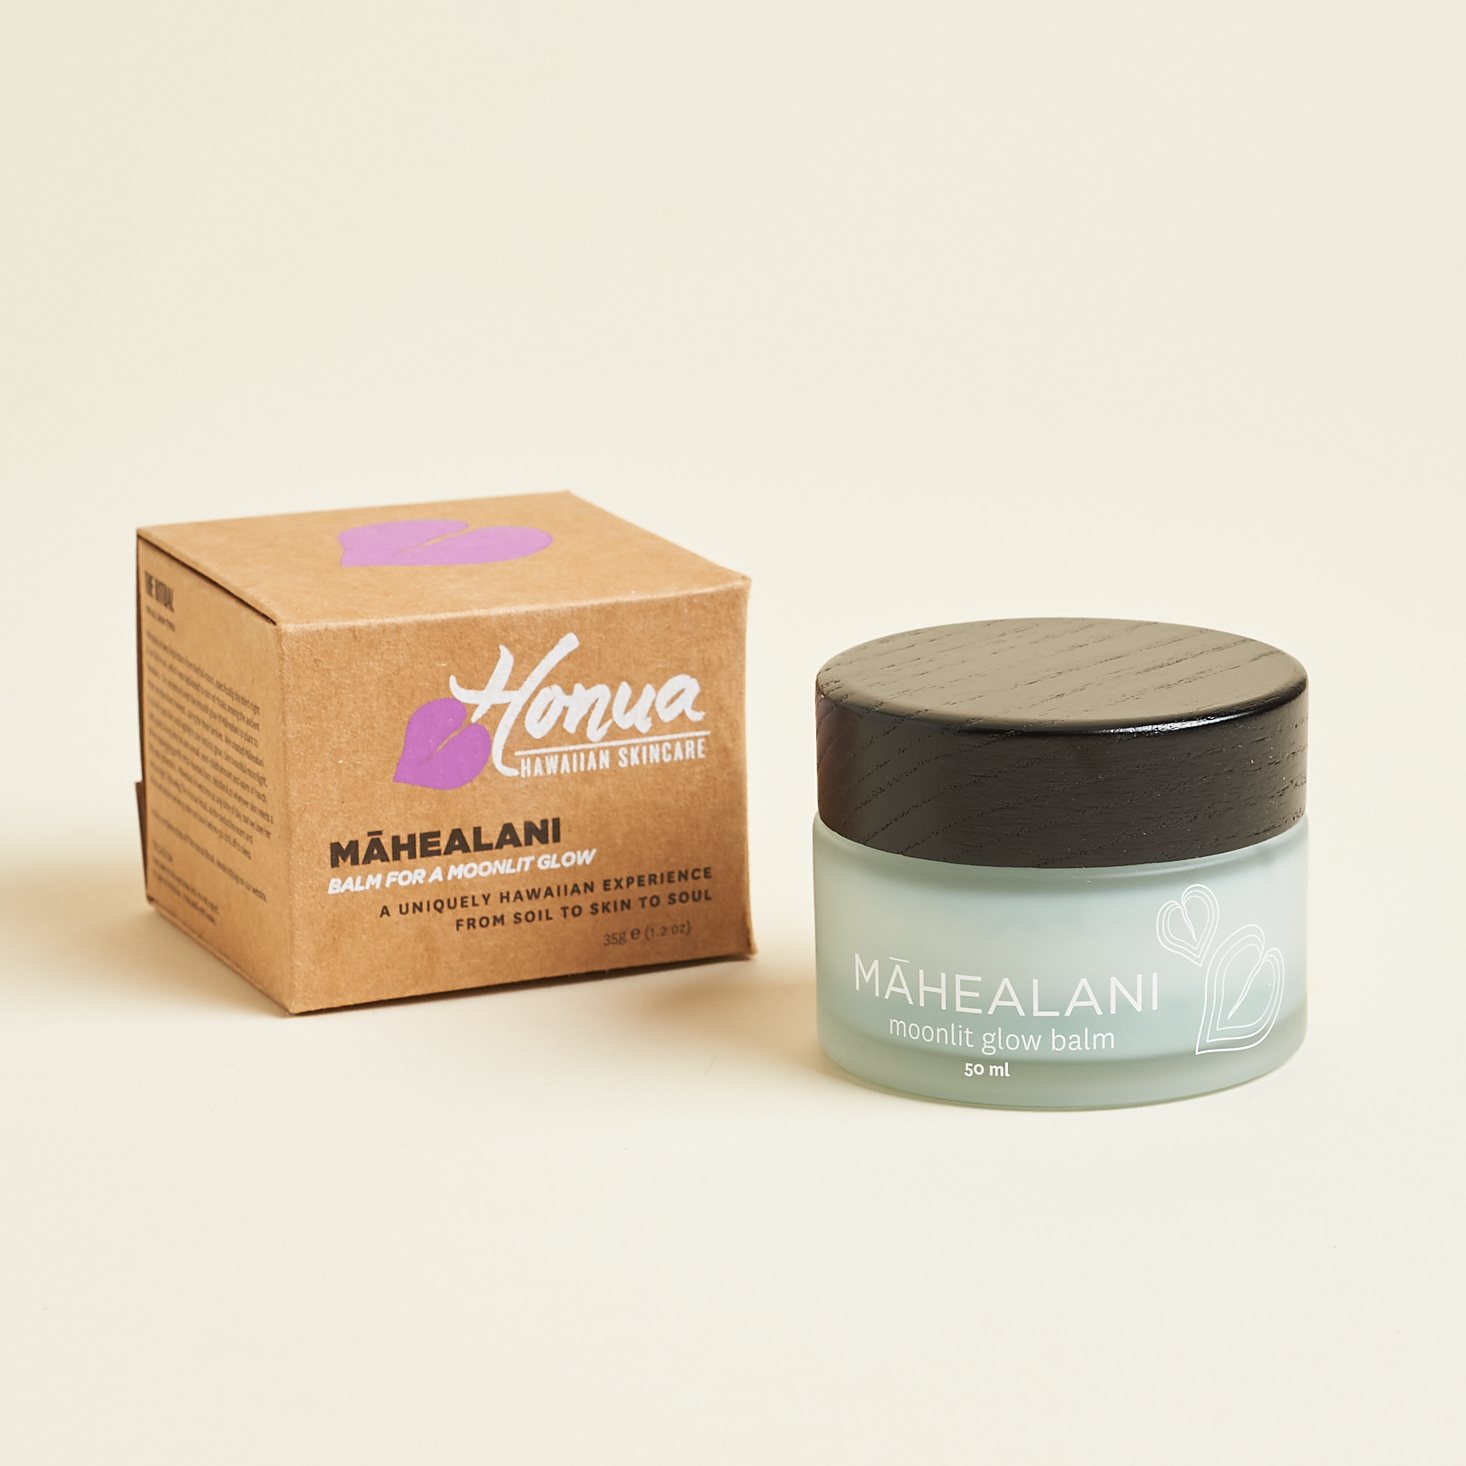 Honua Skincare Mahealani Moonlit Glow Balm, with box